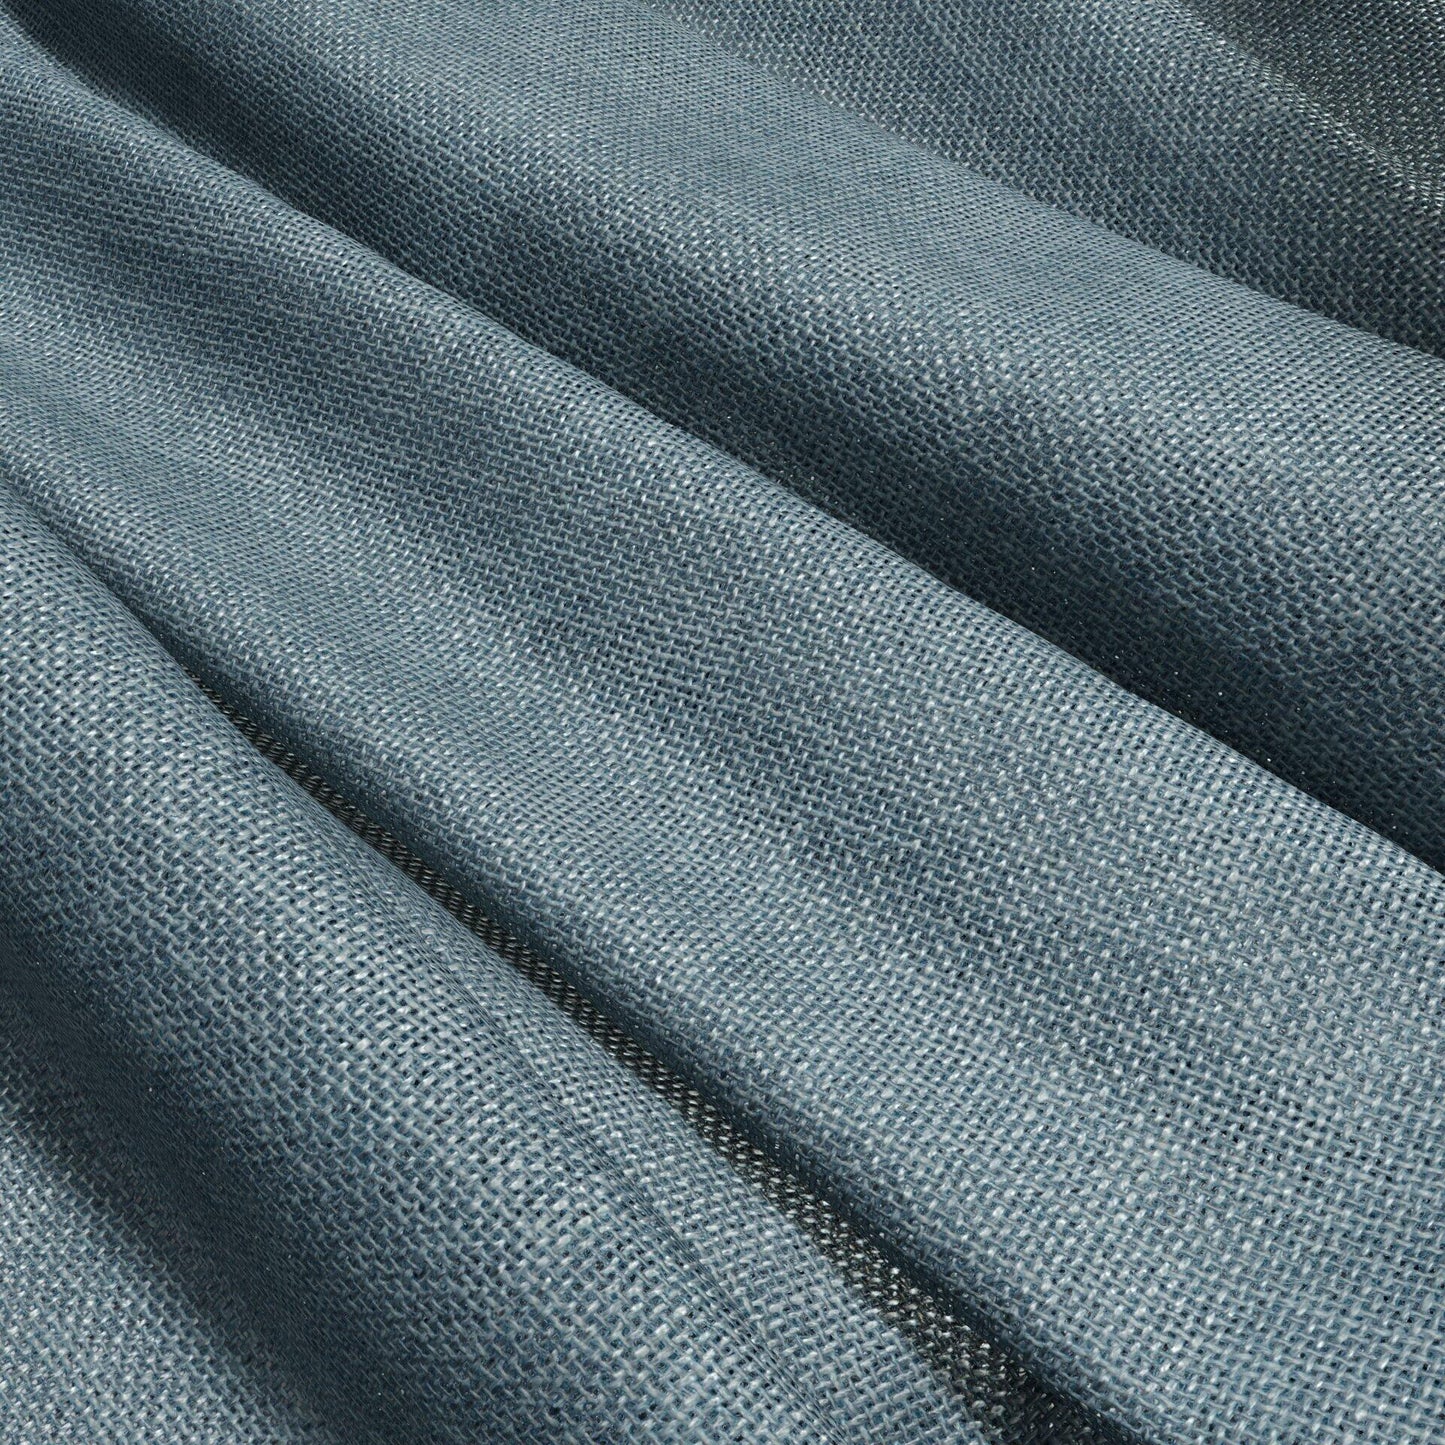 Purchase JF Fabric - Tofino 67J9151